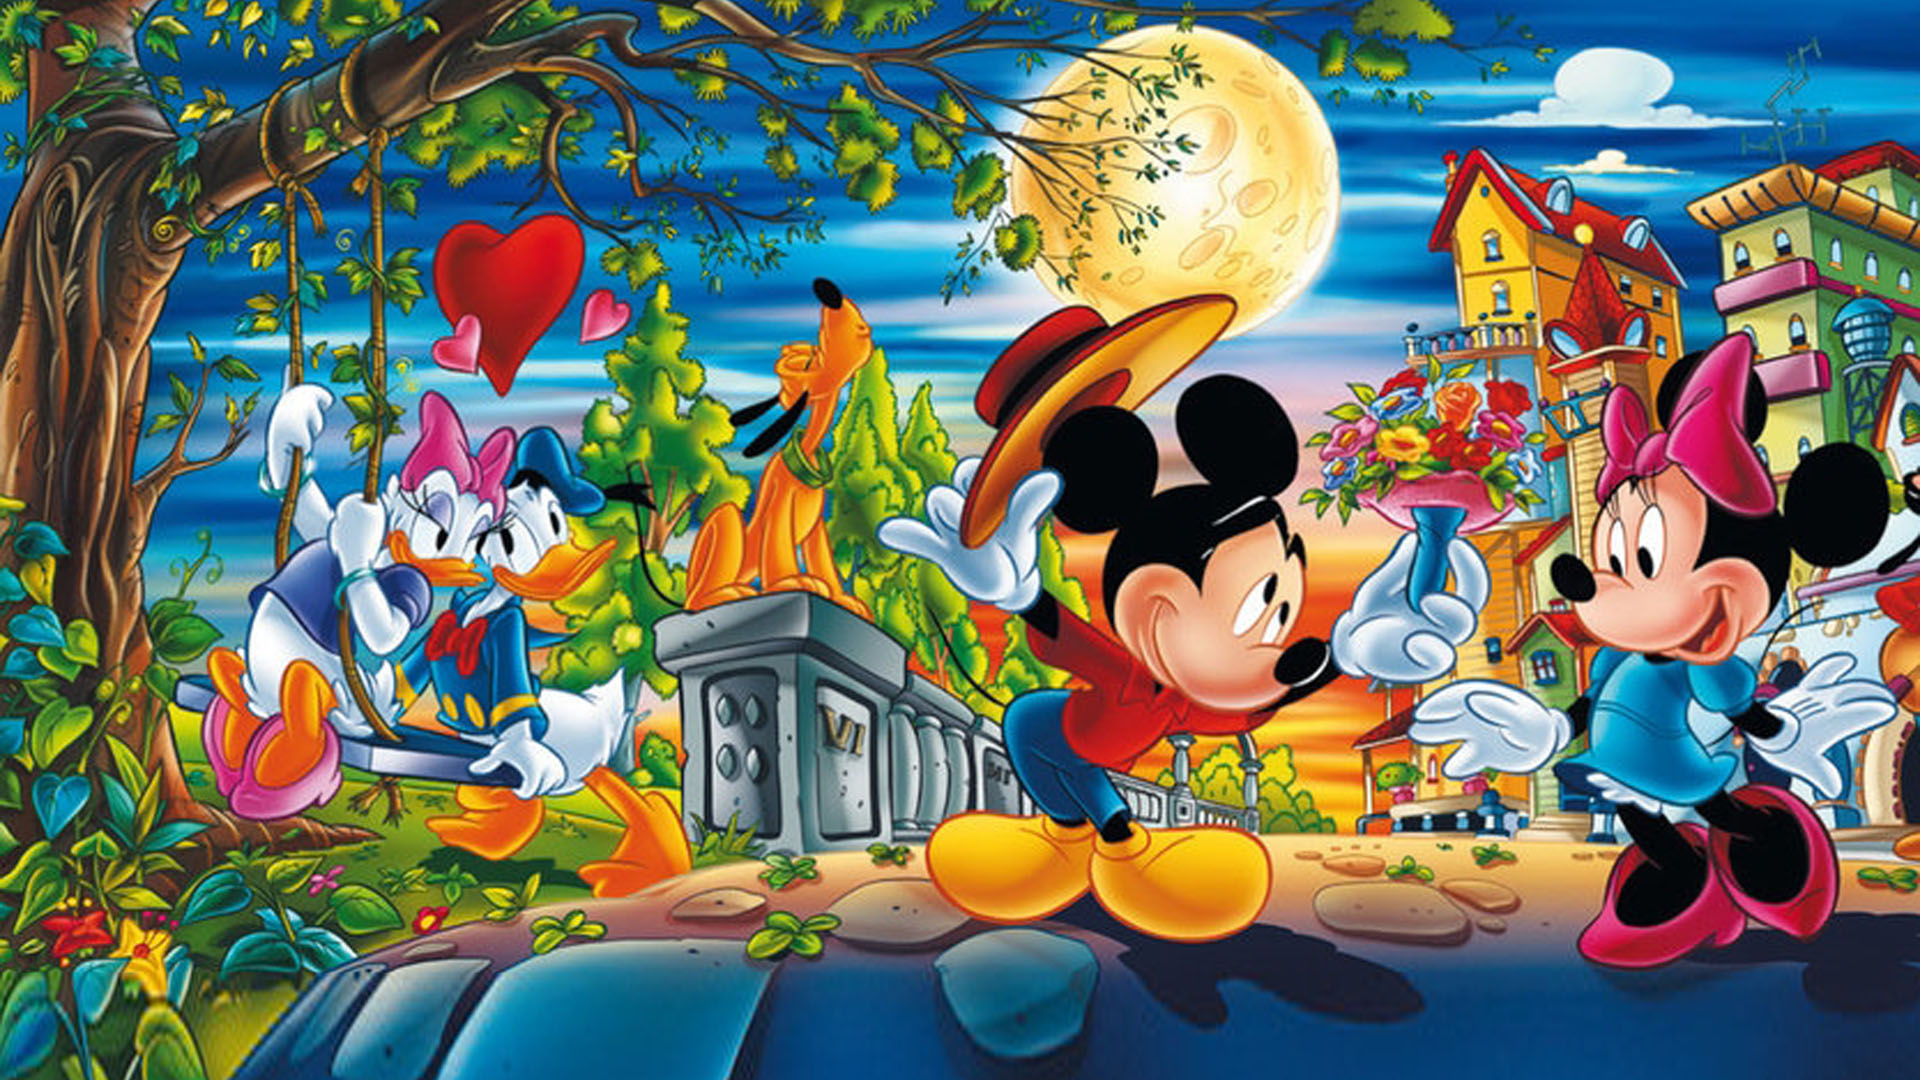 Mickey And Minnie Mouse Love Desktop Wallpaper 07993 - Baltana